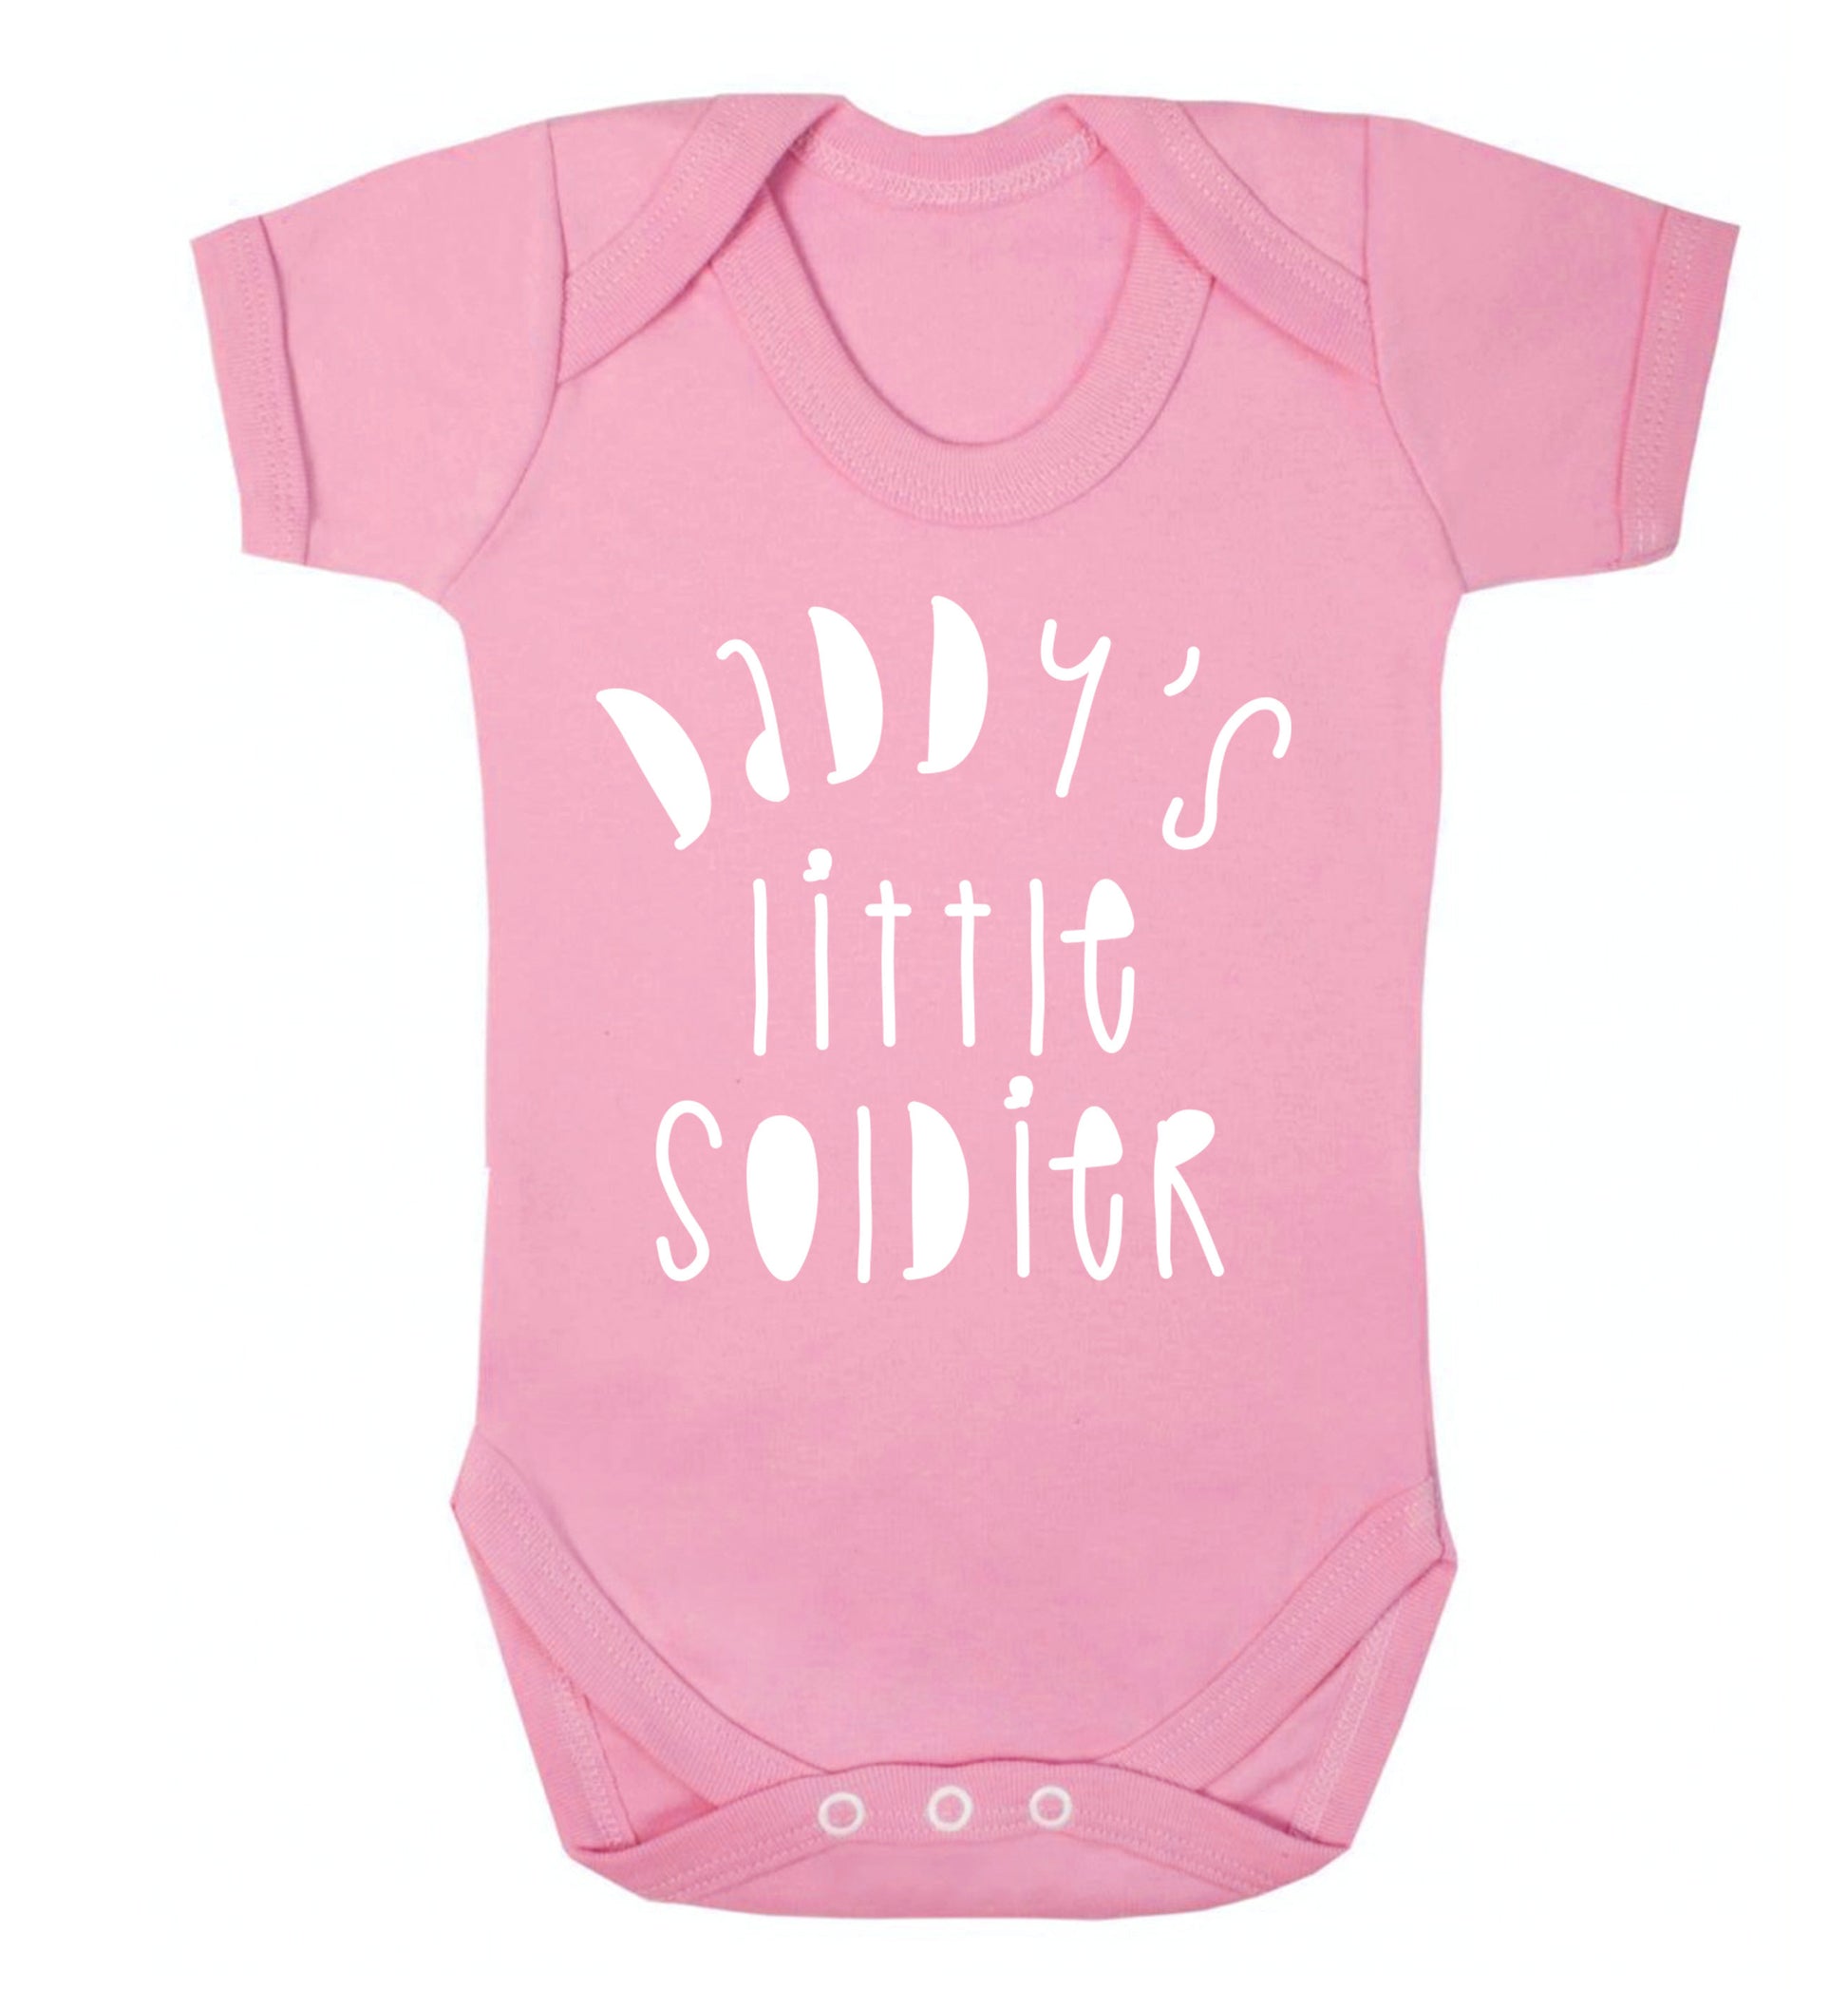 Daddy's little soldier Baby Vest pale pink 18-24 months